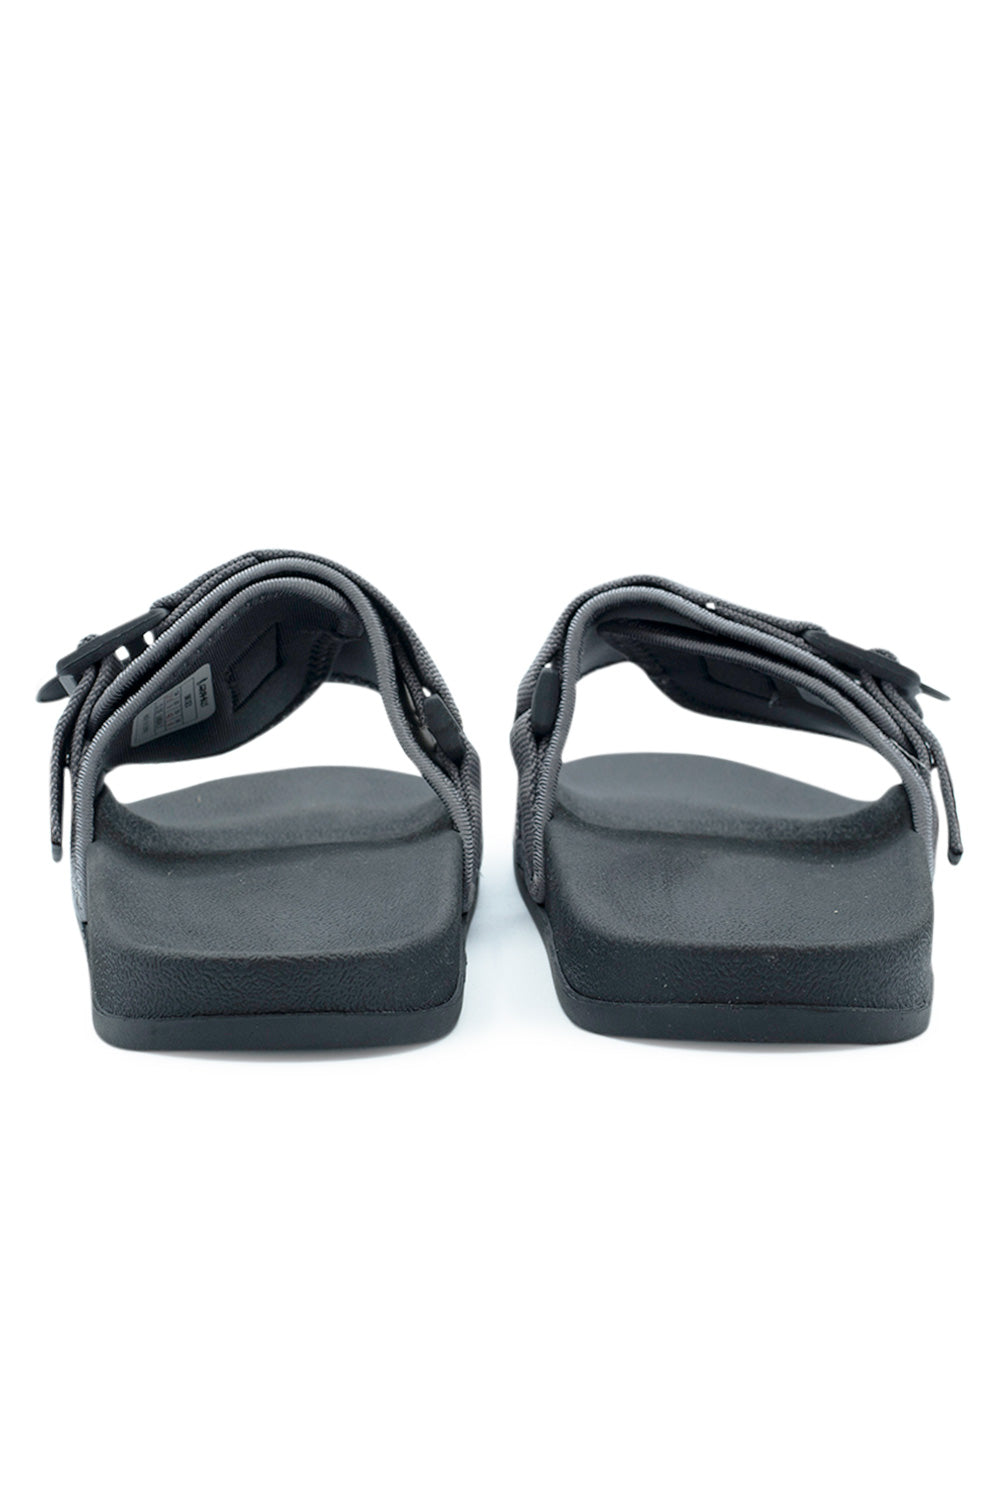 Gramicci Slide Sandals Grey - BONKERS